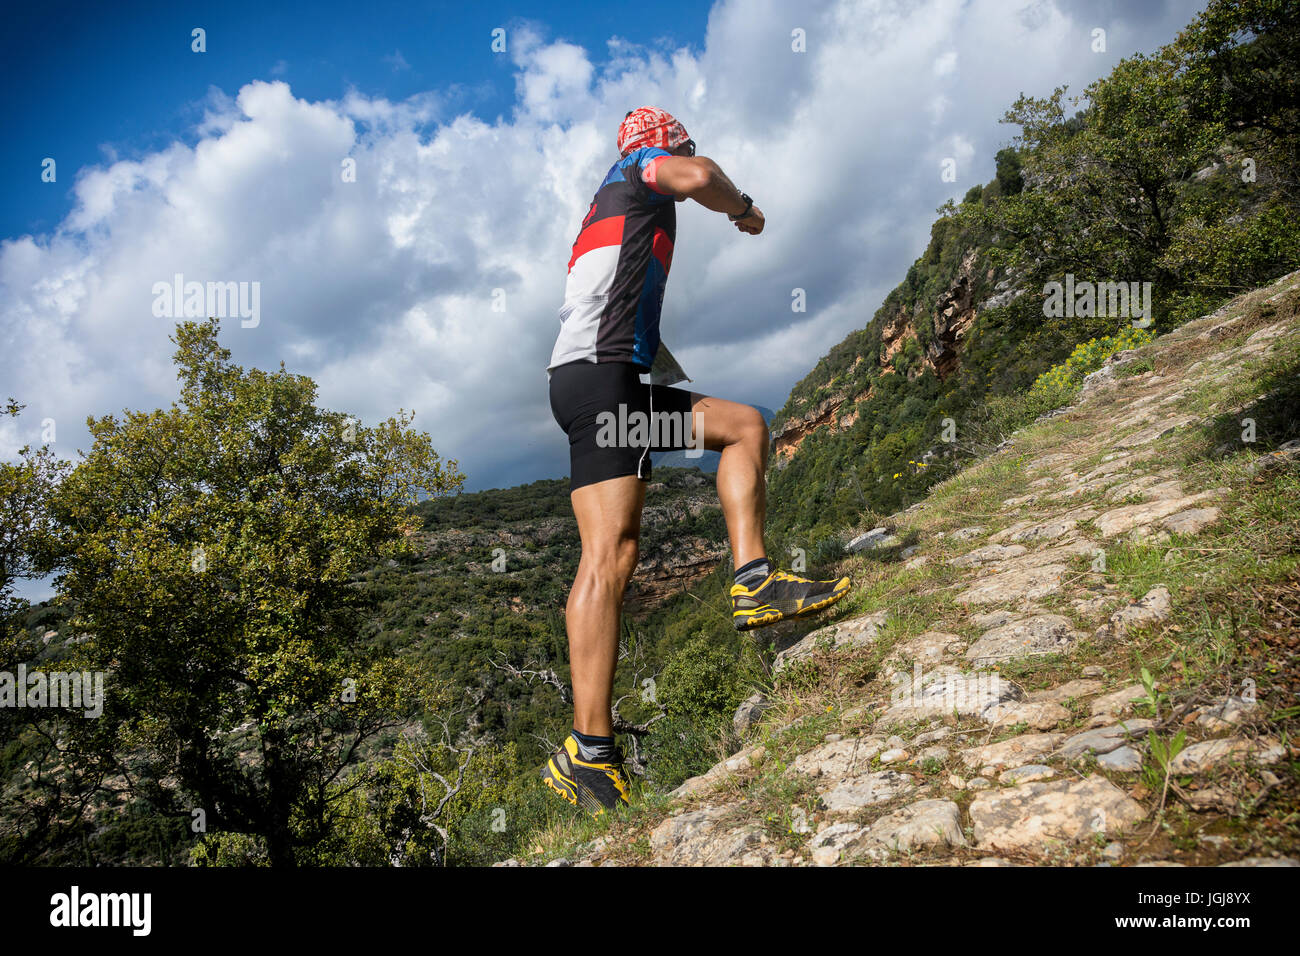 trail runner on vertical uphill race Stock Photo